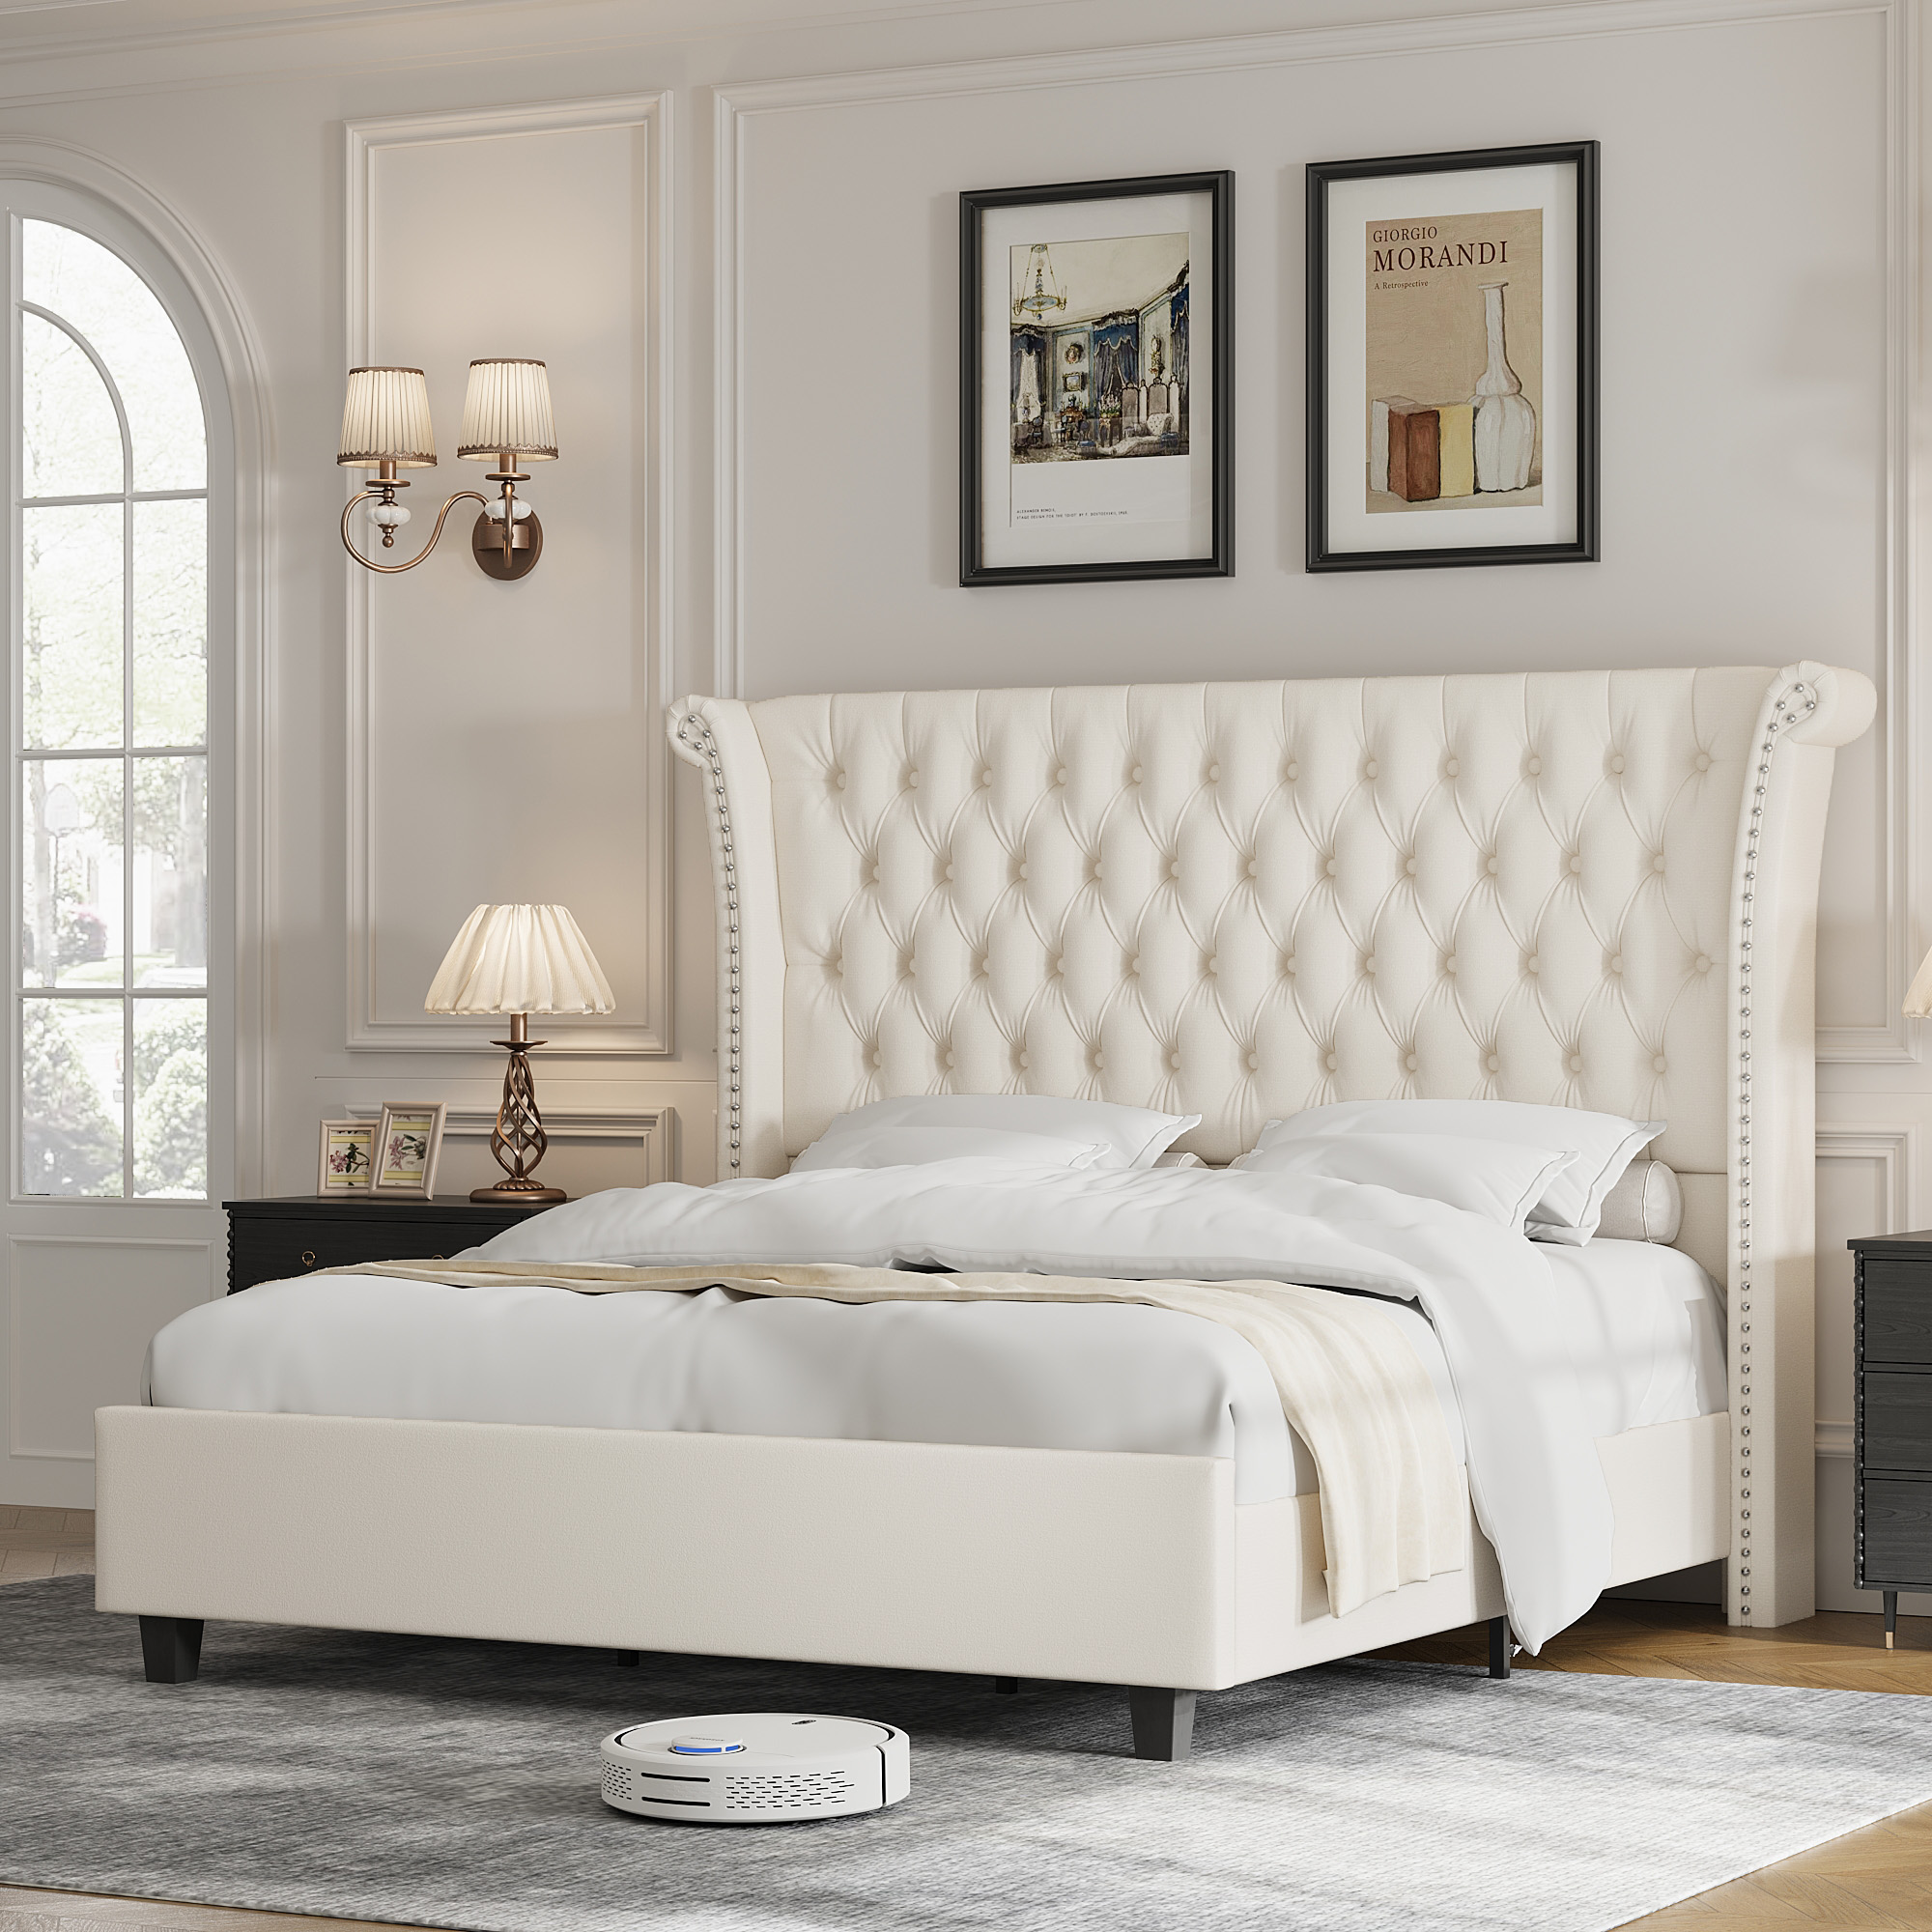 Homfa King Size Bed Frame, Modern Velvet Tufted Upholstered Platform Bed with Rivet Rolled Edge High Wingback Headboard, White - image 1 of 7